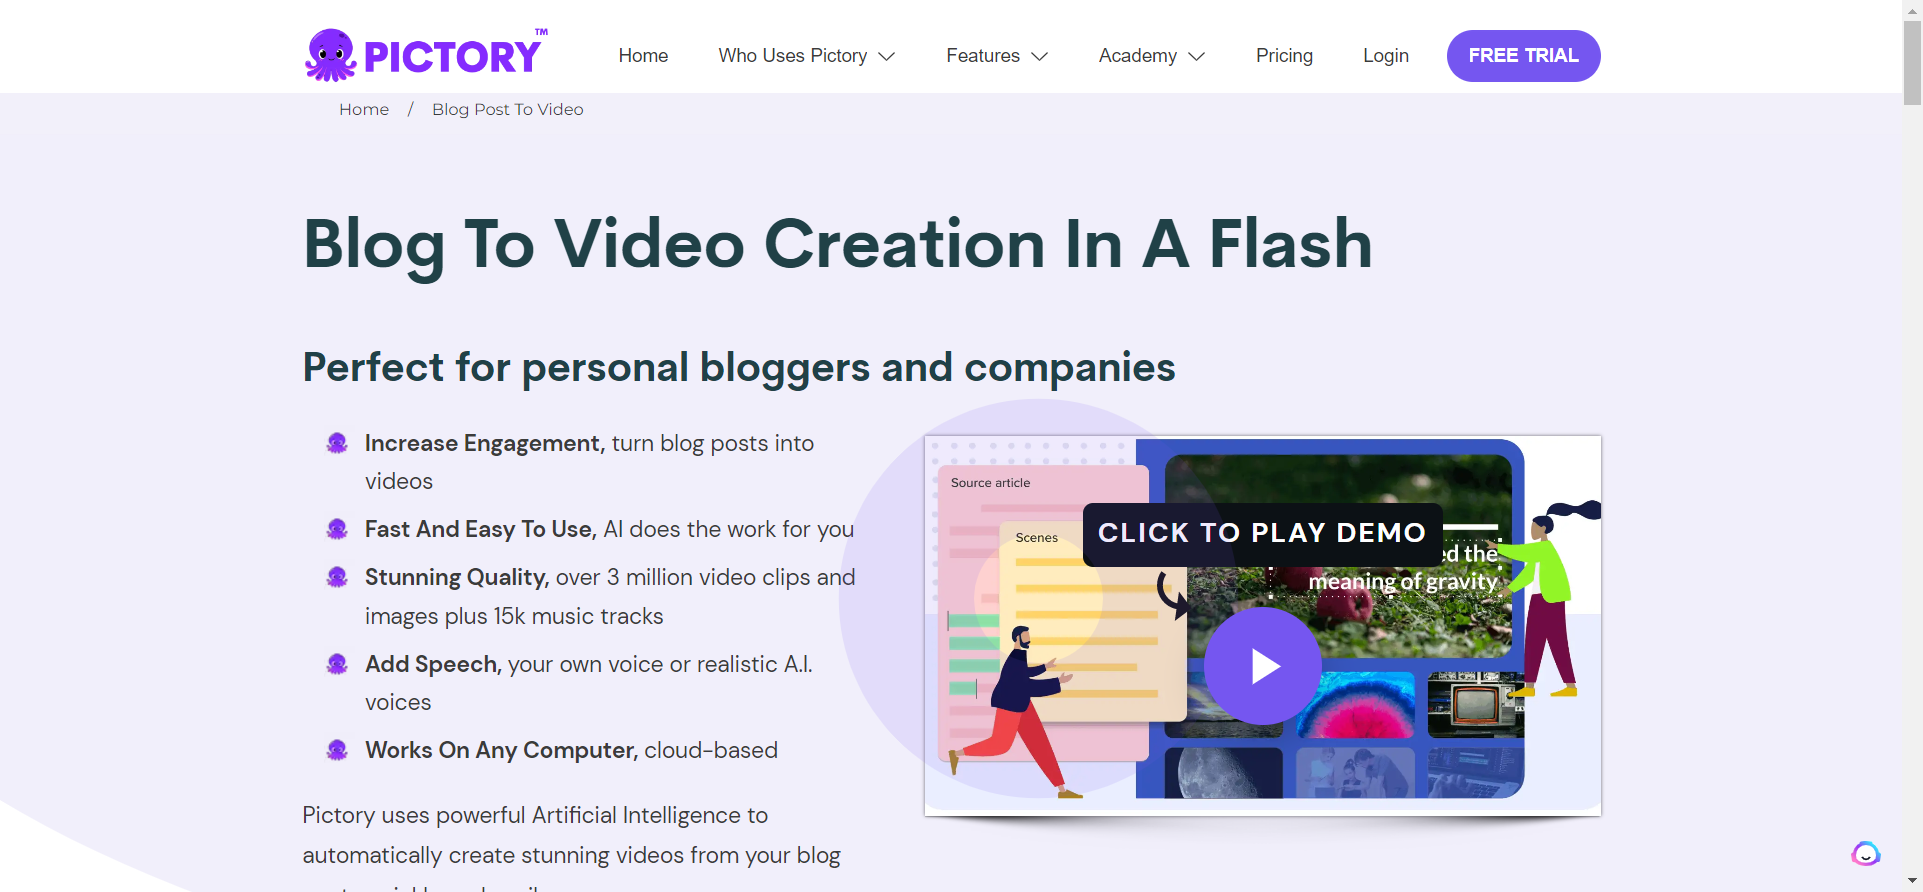 Turn blog posts into videos